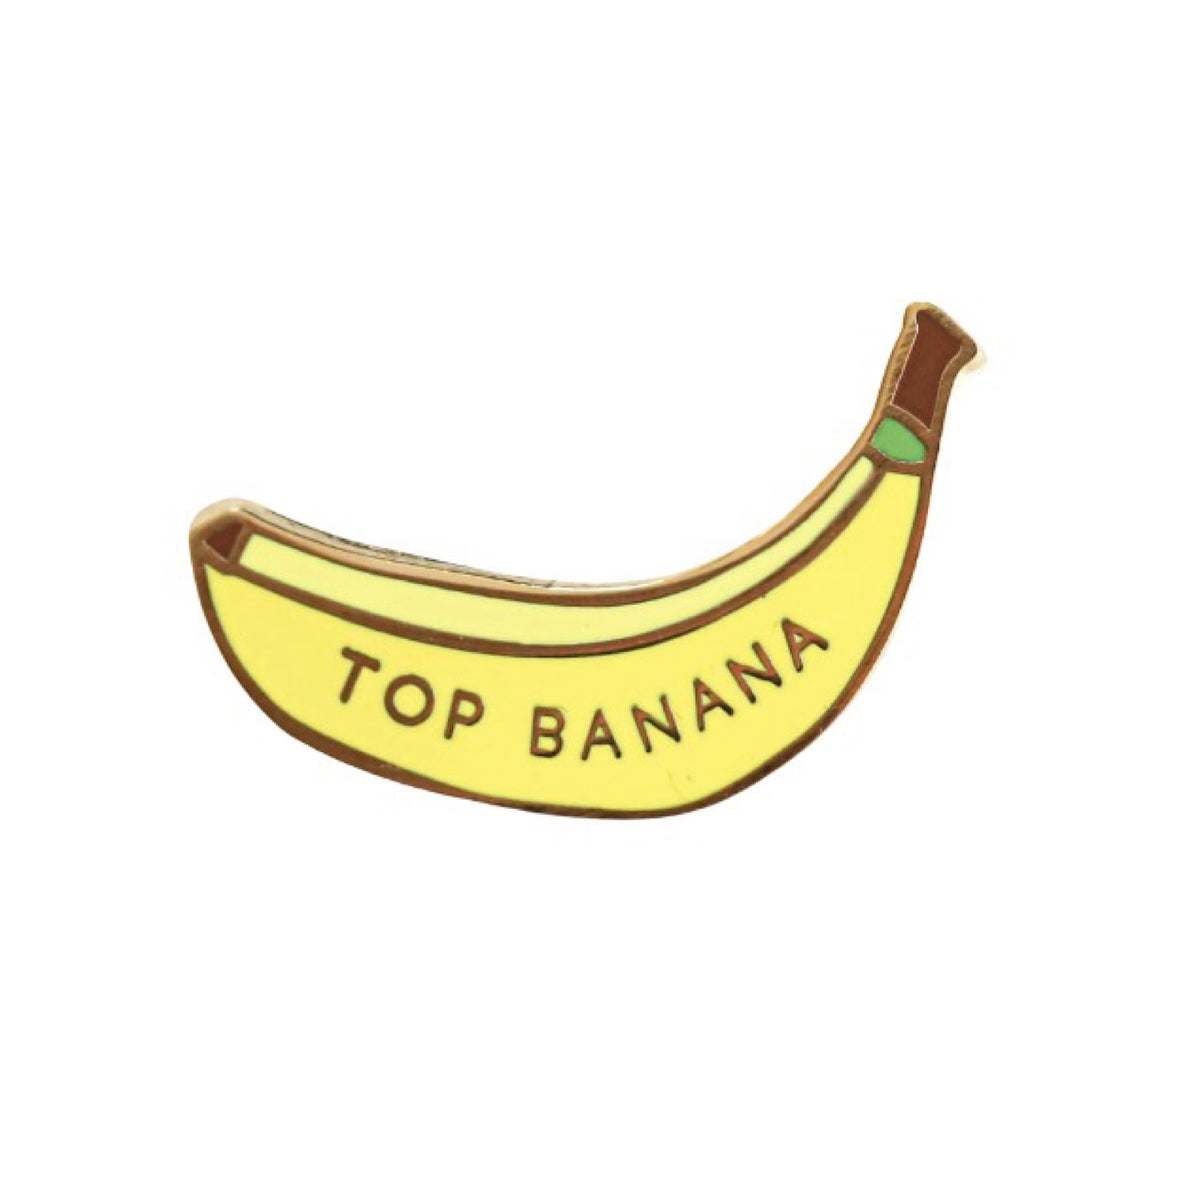 Top Banana Pin